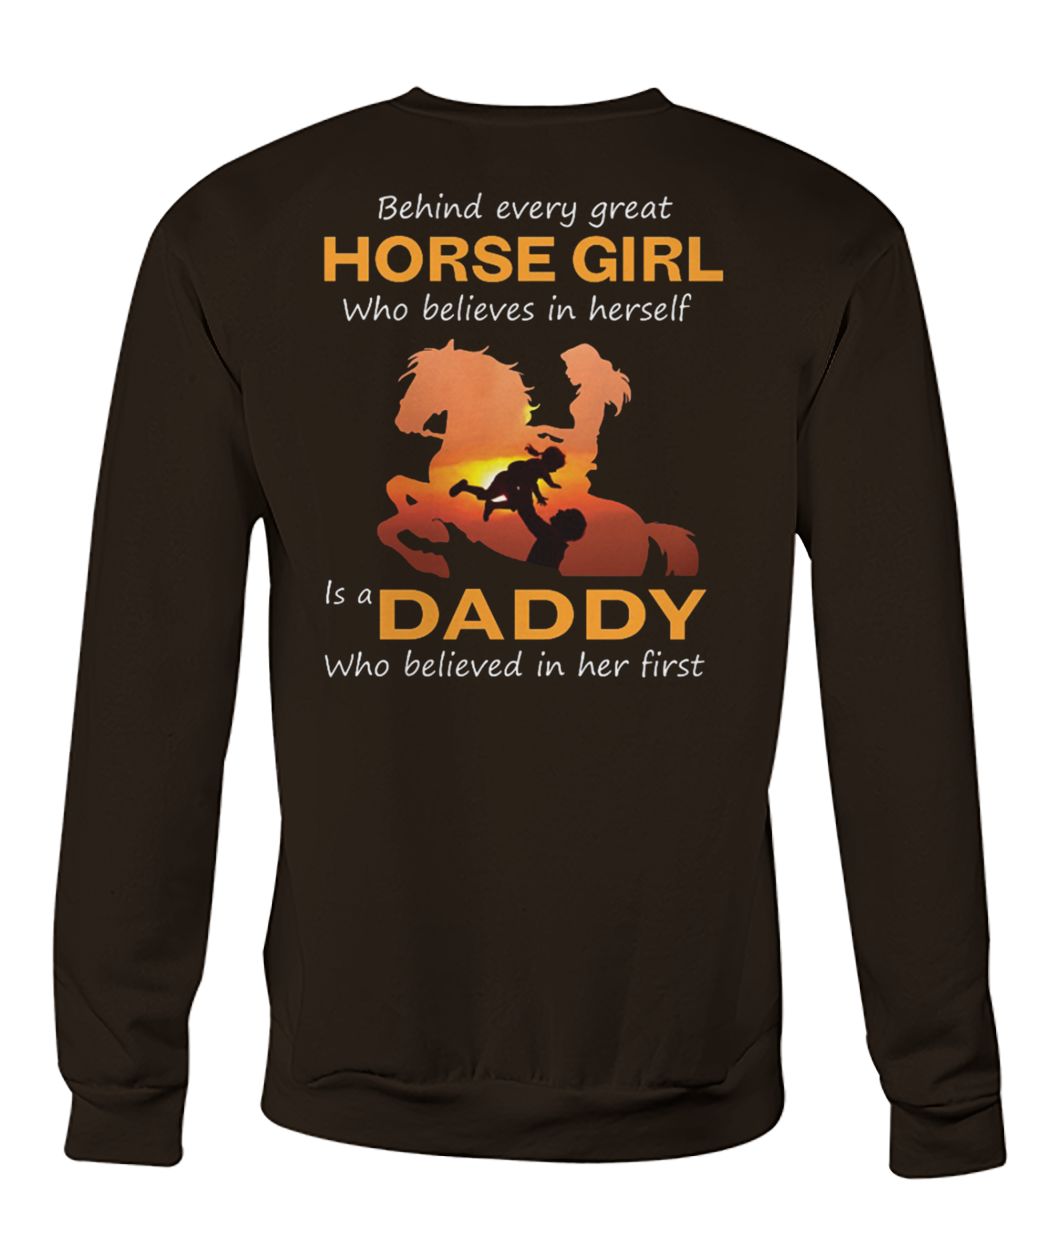 Behind every horse girl who believes in herself crew neck sweatshirt